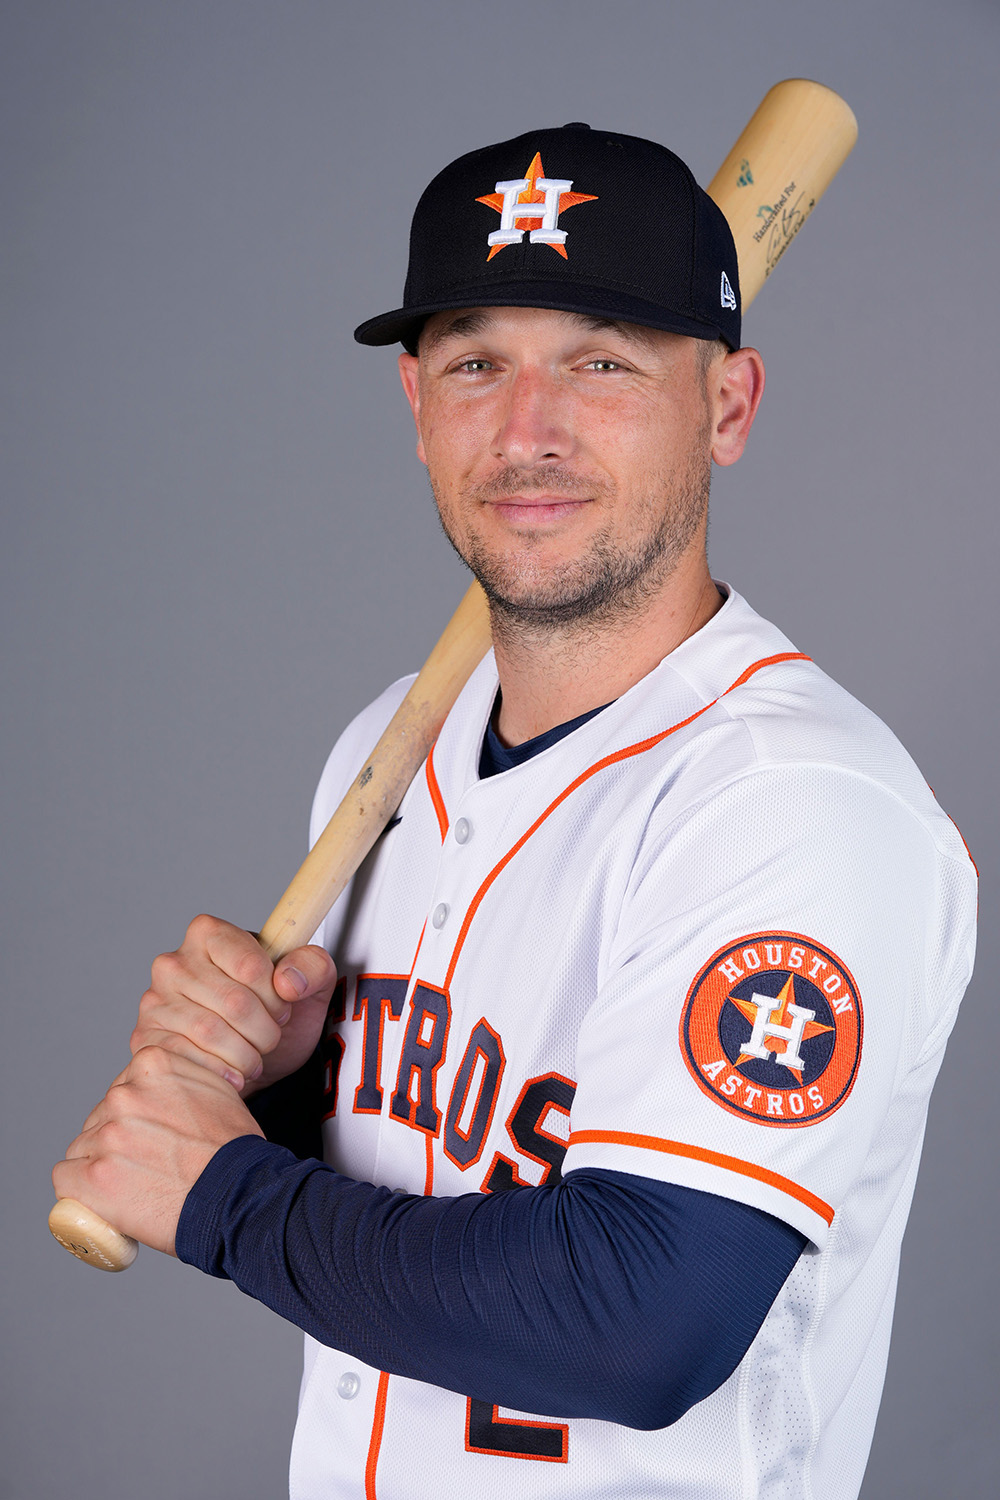 Things to know about Alex Bregman, the newest Houston Astros folk hero